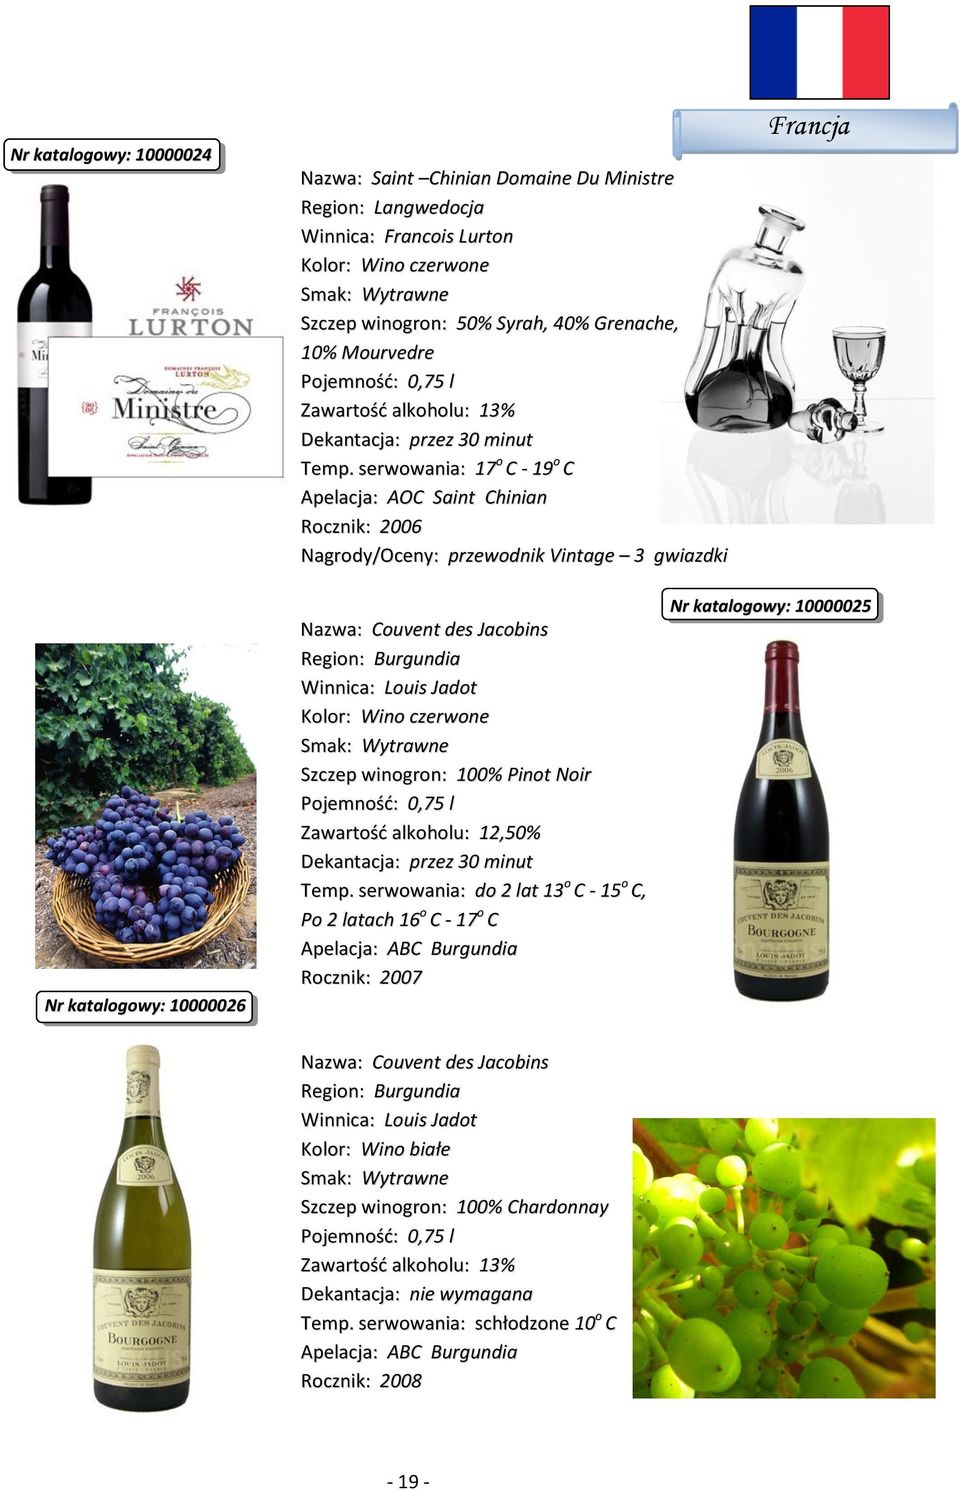 Region: Burgundia Winnica: Louis Jadot Szczep winogron: 100% Pinot Noir Temp.